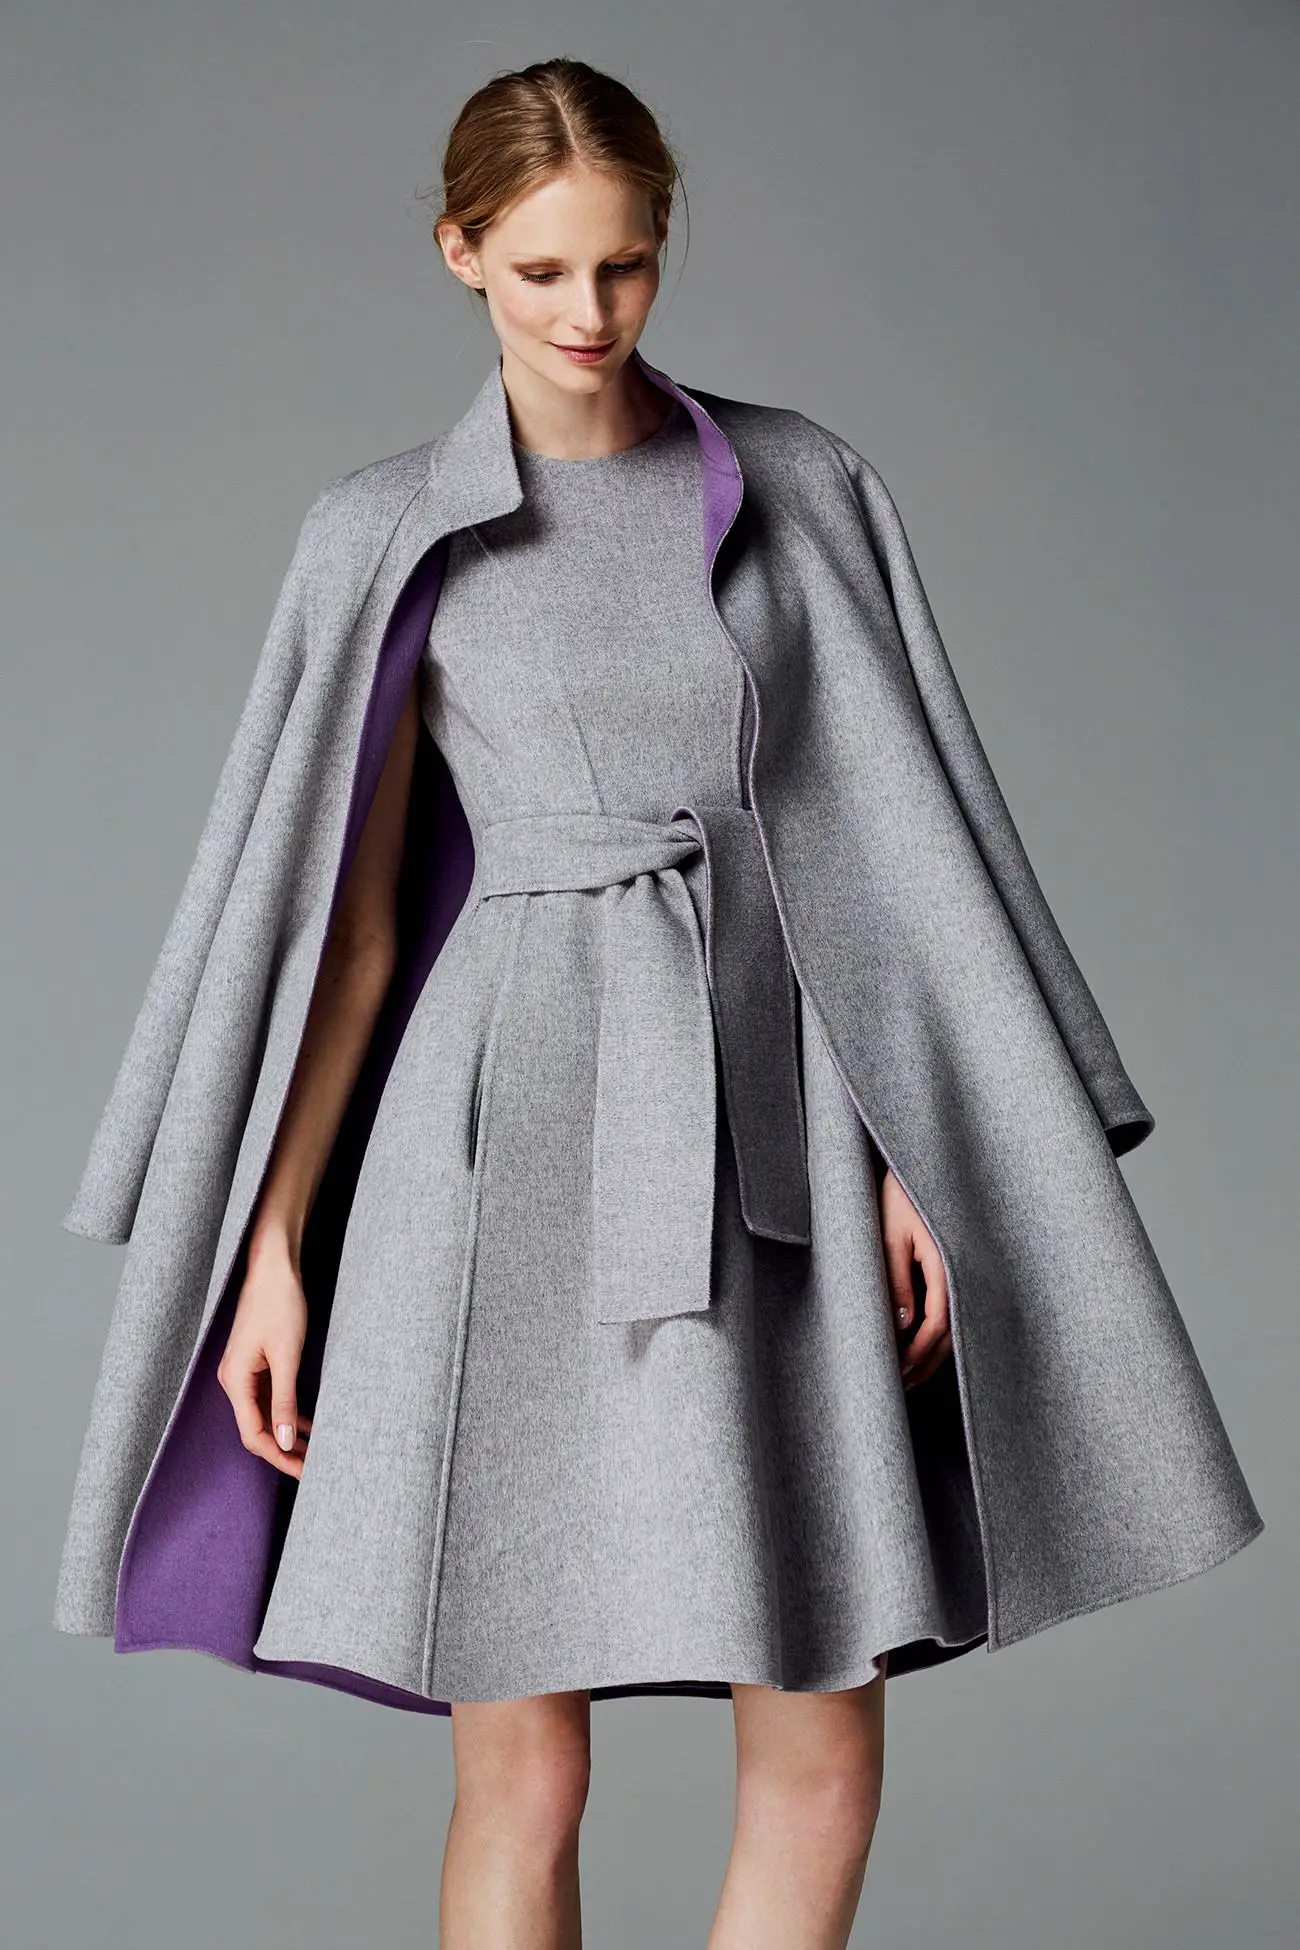 Queen Letizia of Spain wore Carolina Herrera double wool gray-purple coat